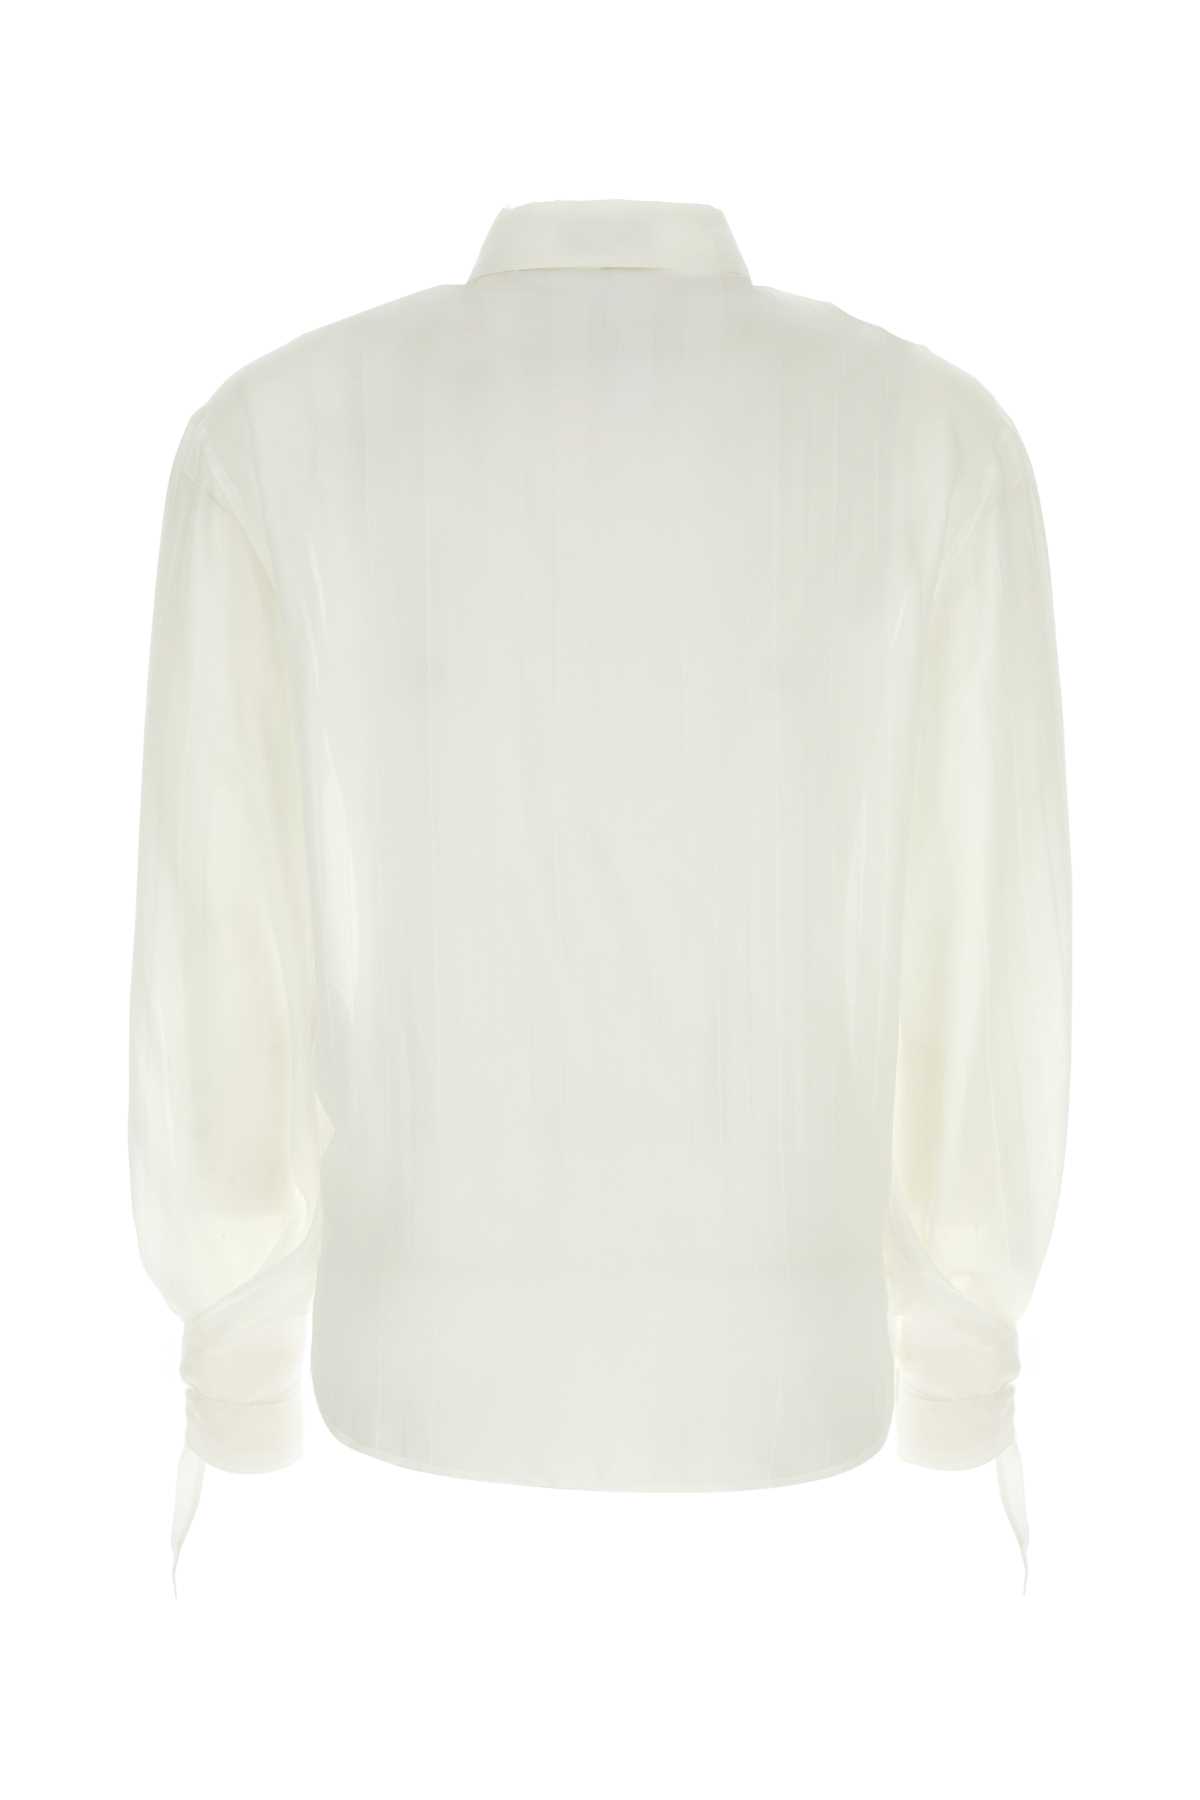 Saint Laurent White Crepe Shirt In Gesso